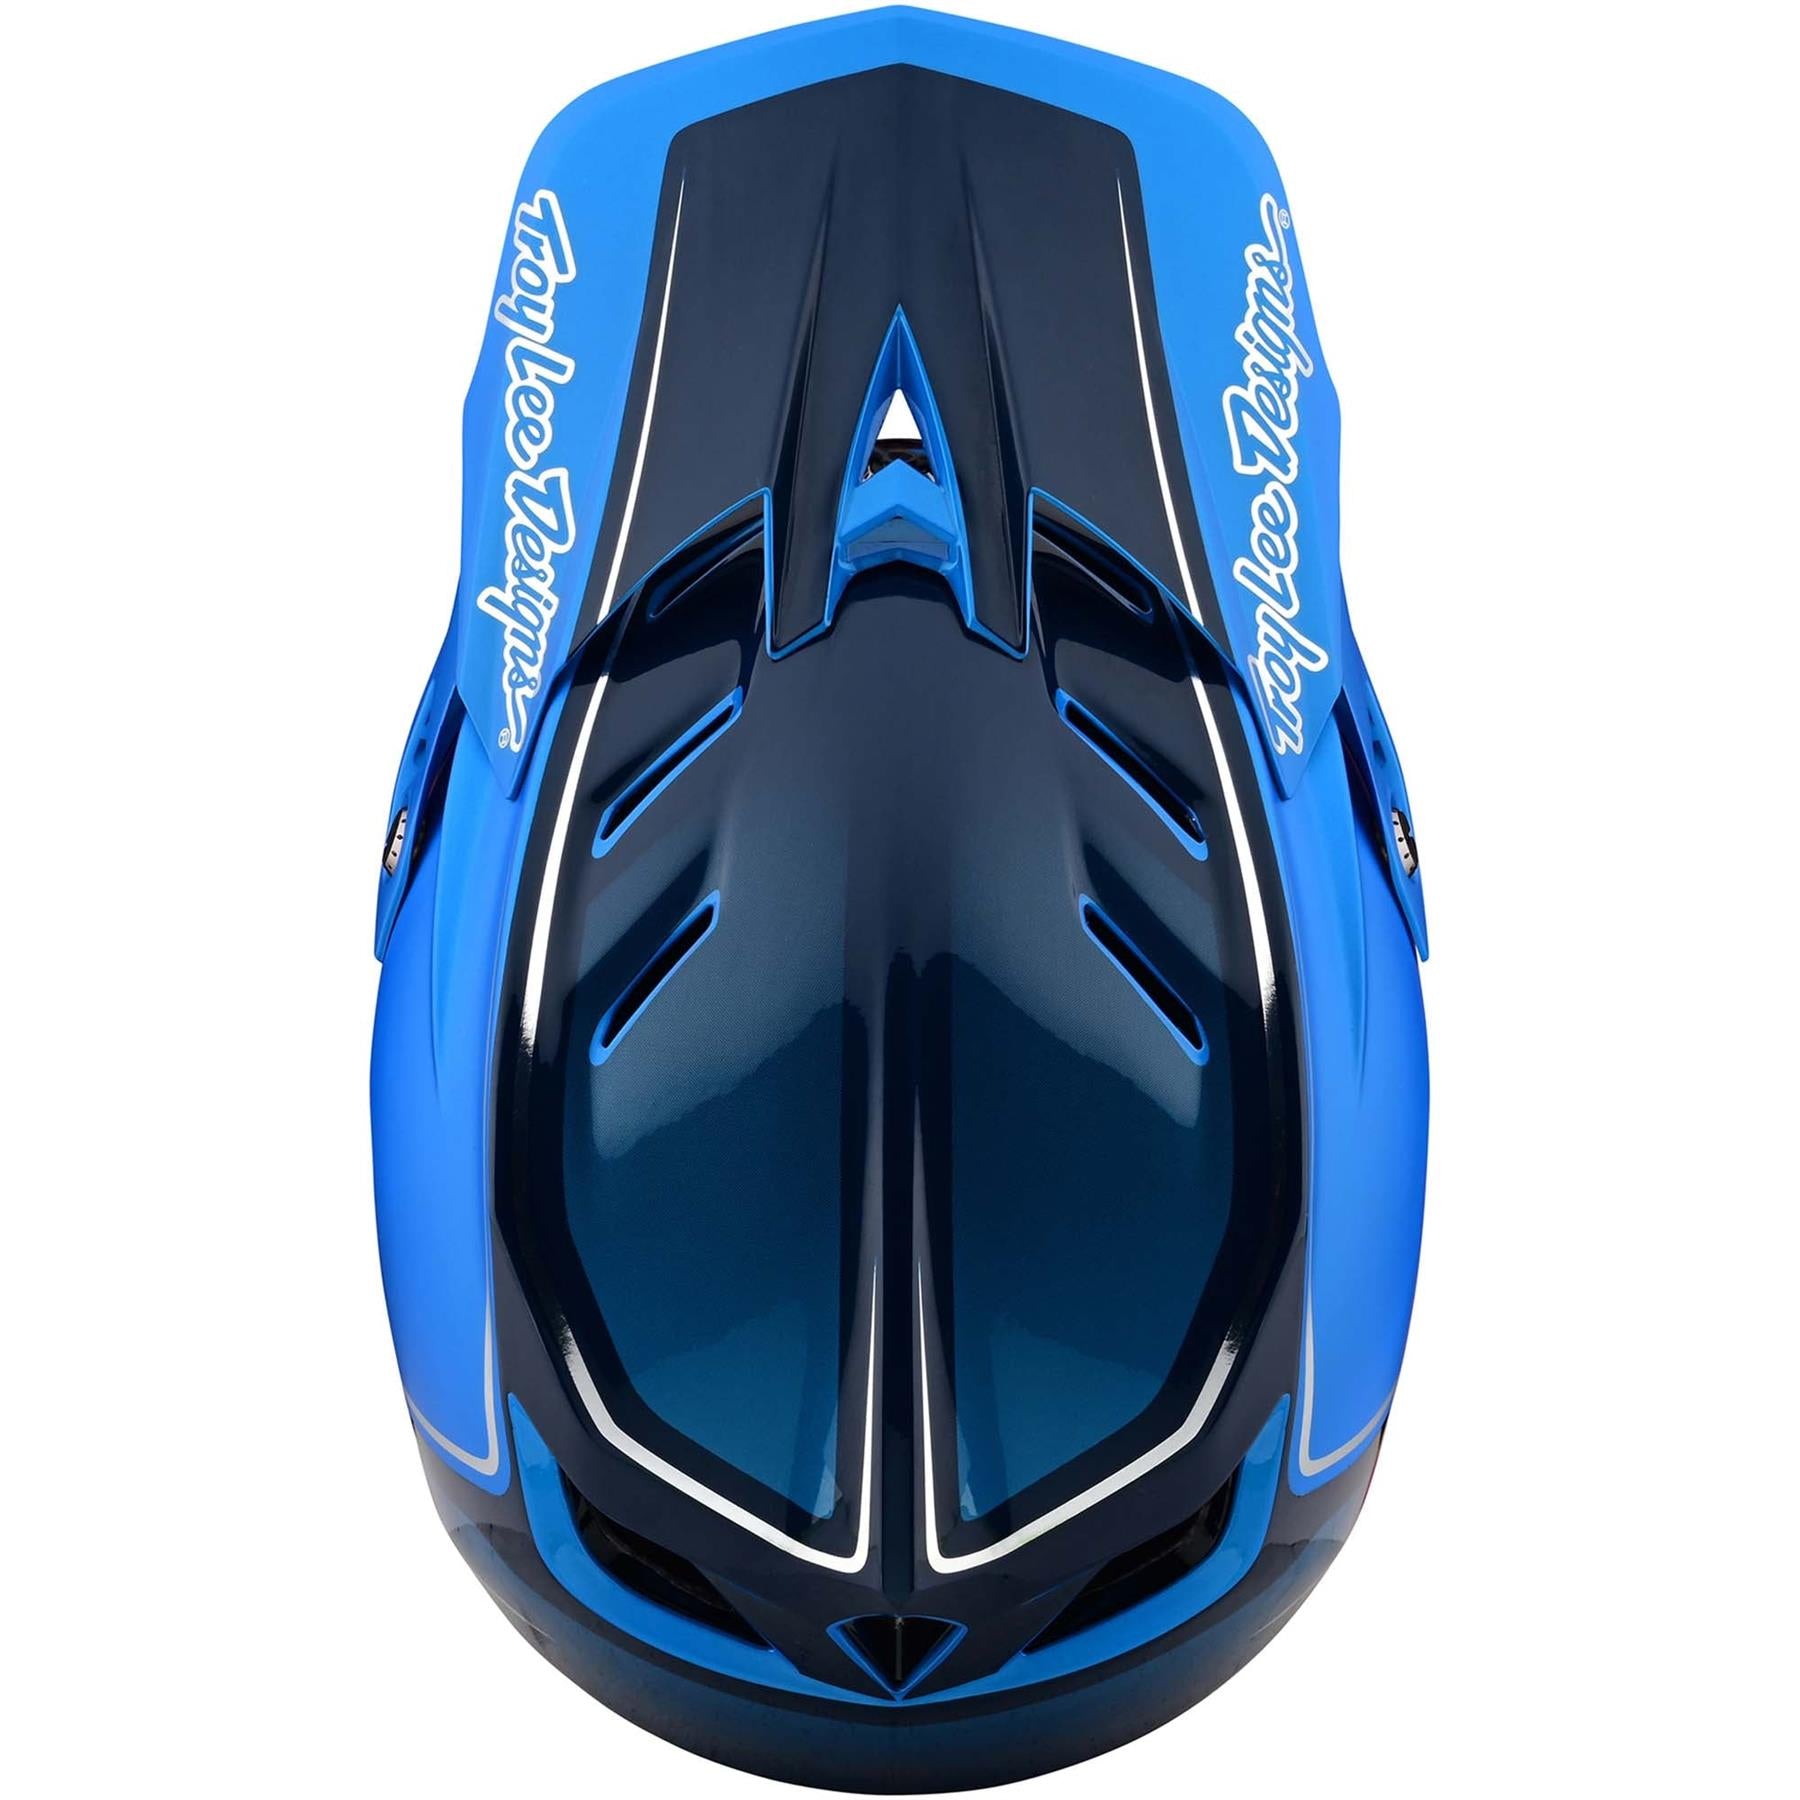 Troy Lee D4 Composite Race Helmet - Shadow/Blue